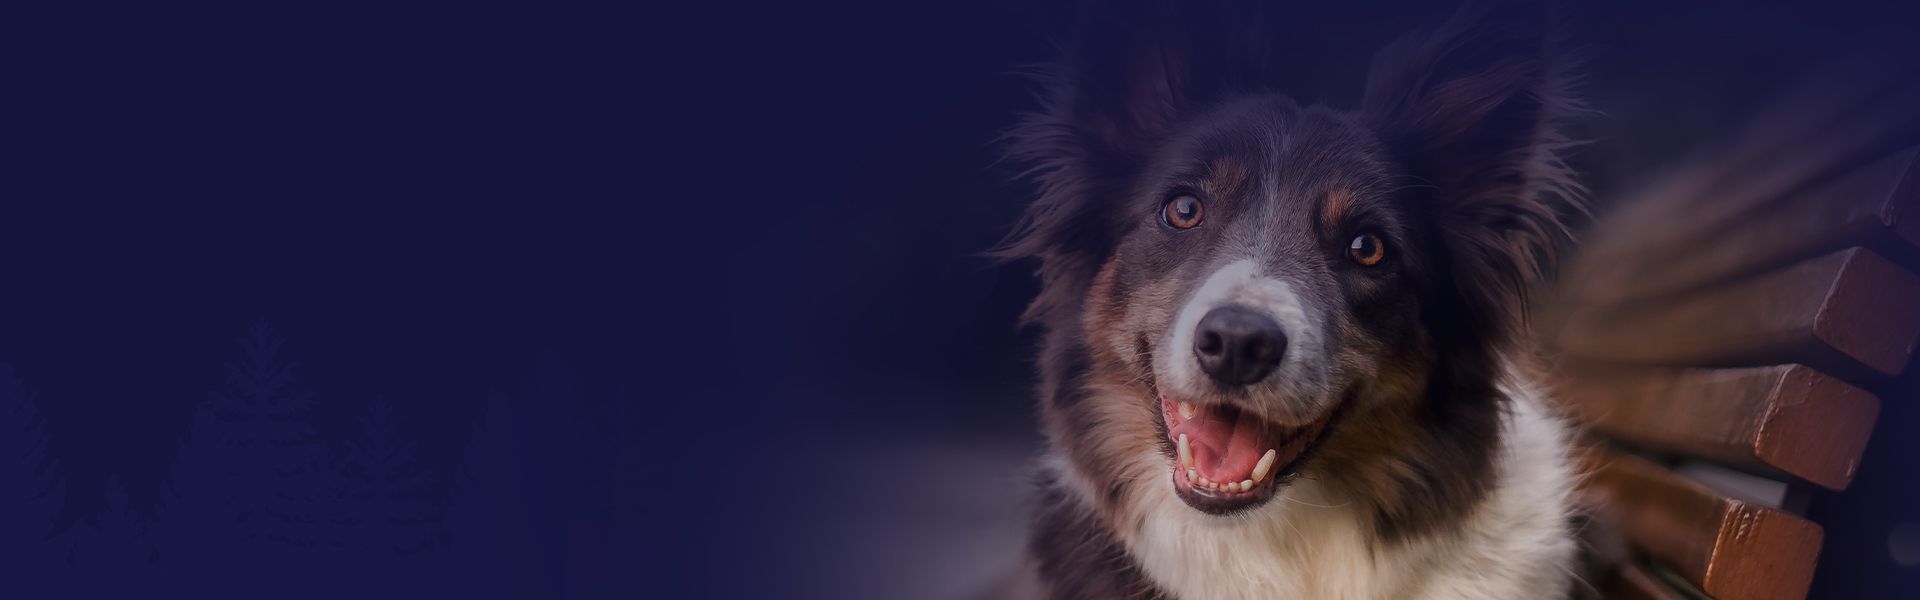 smiling border collie dog